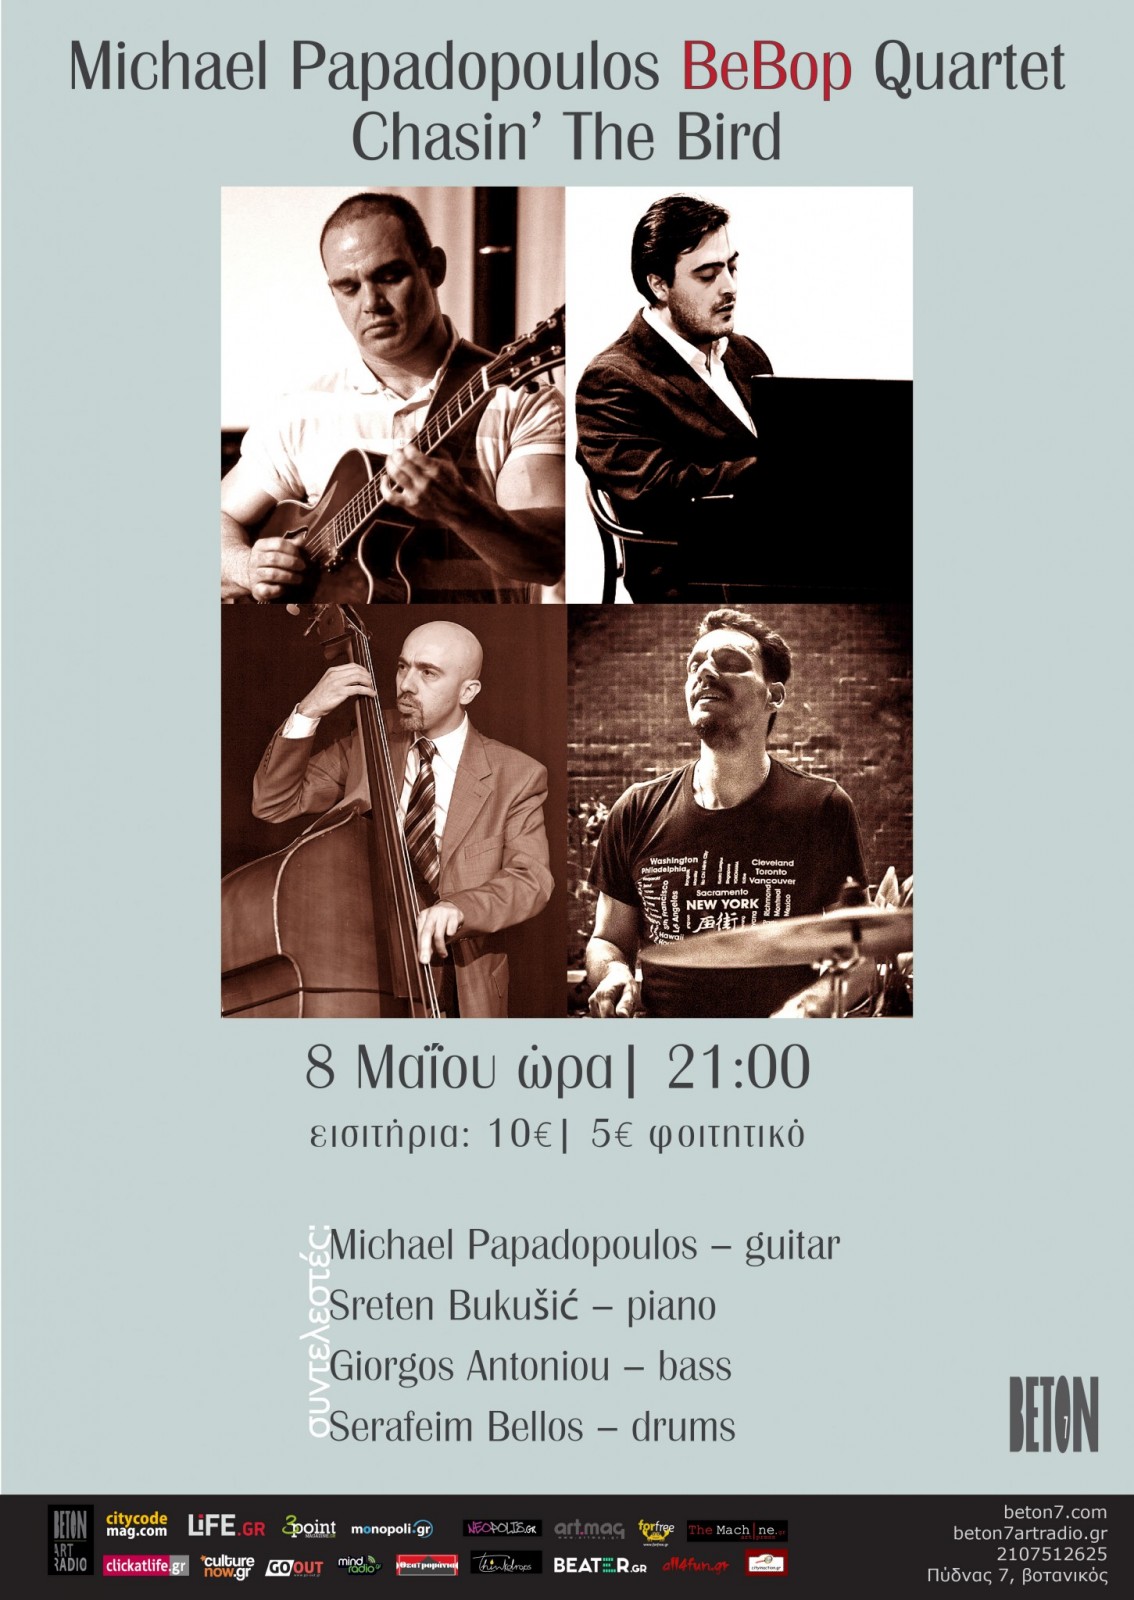 Michael Papadopoulos BeBop Quartet στο ΒΕΤΟΝ7